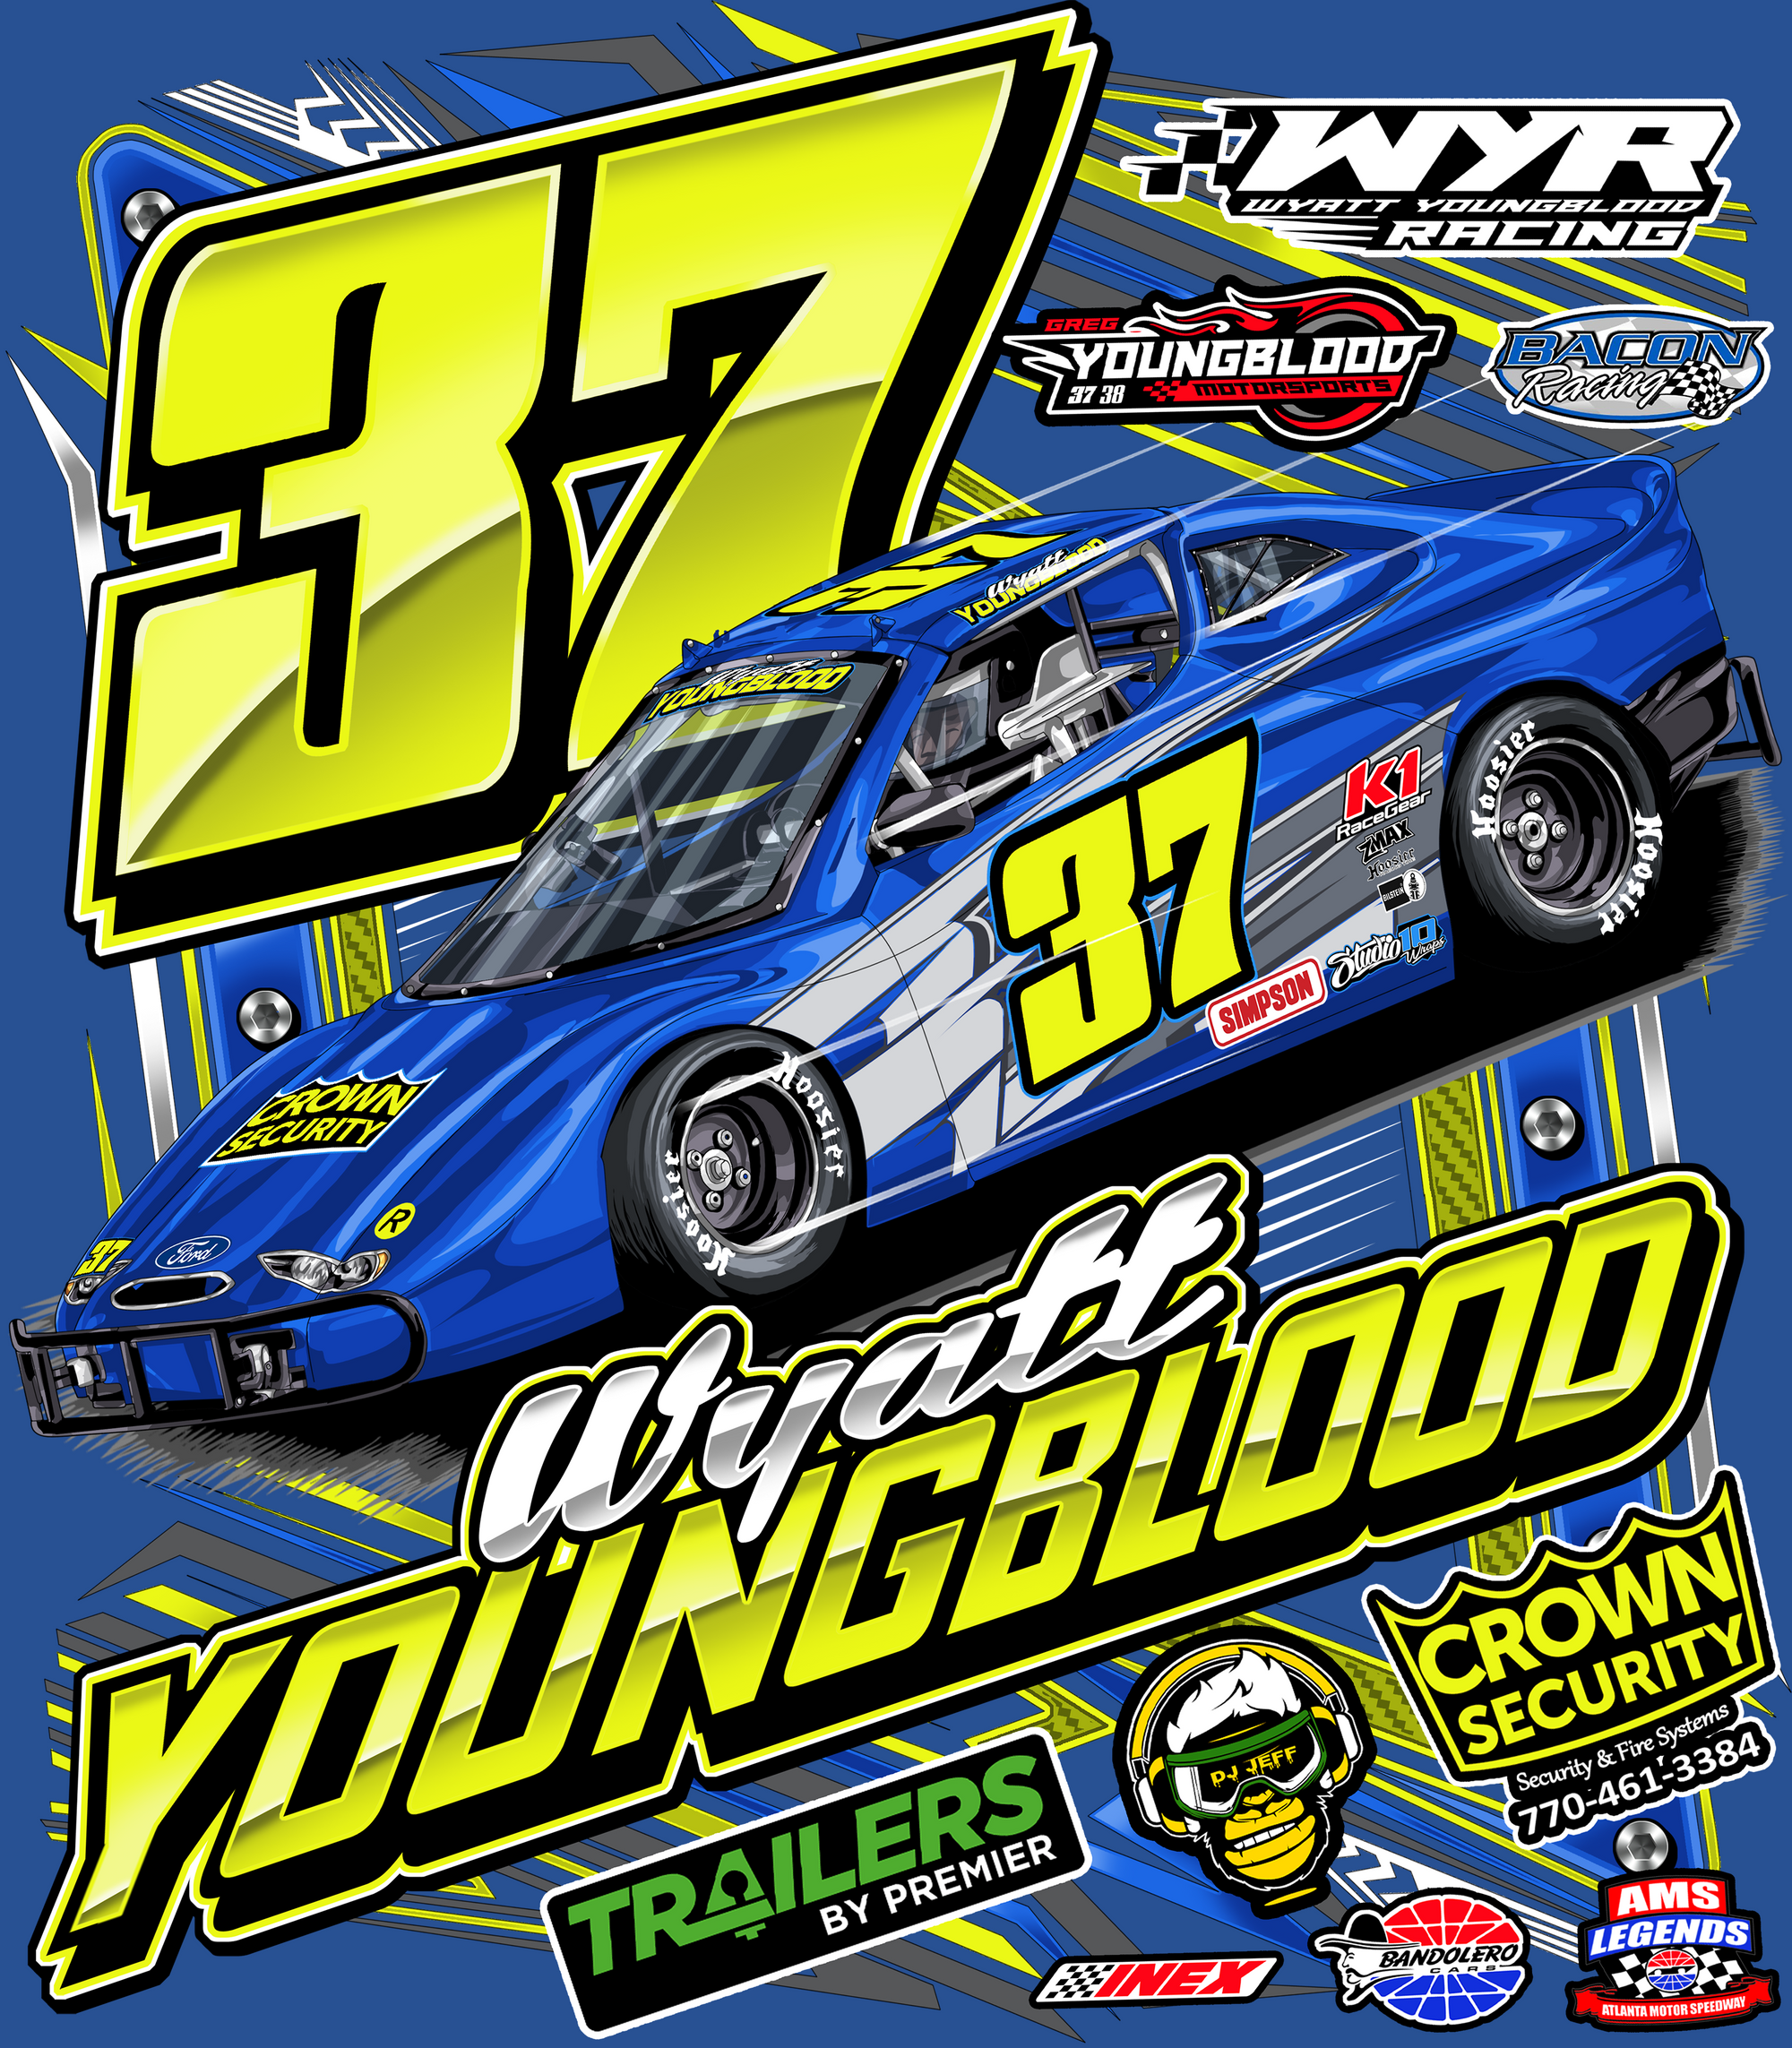 Wyatt Youngblood Racing